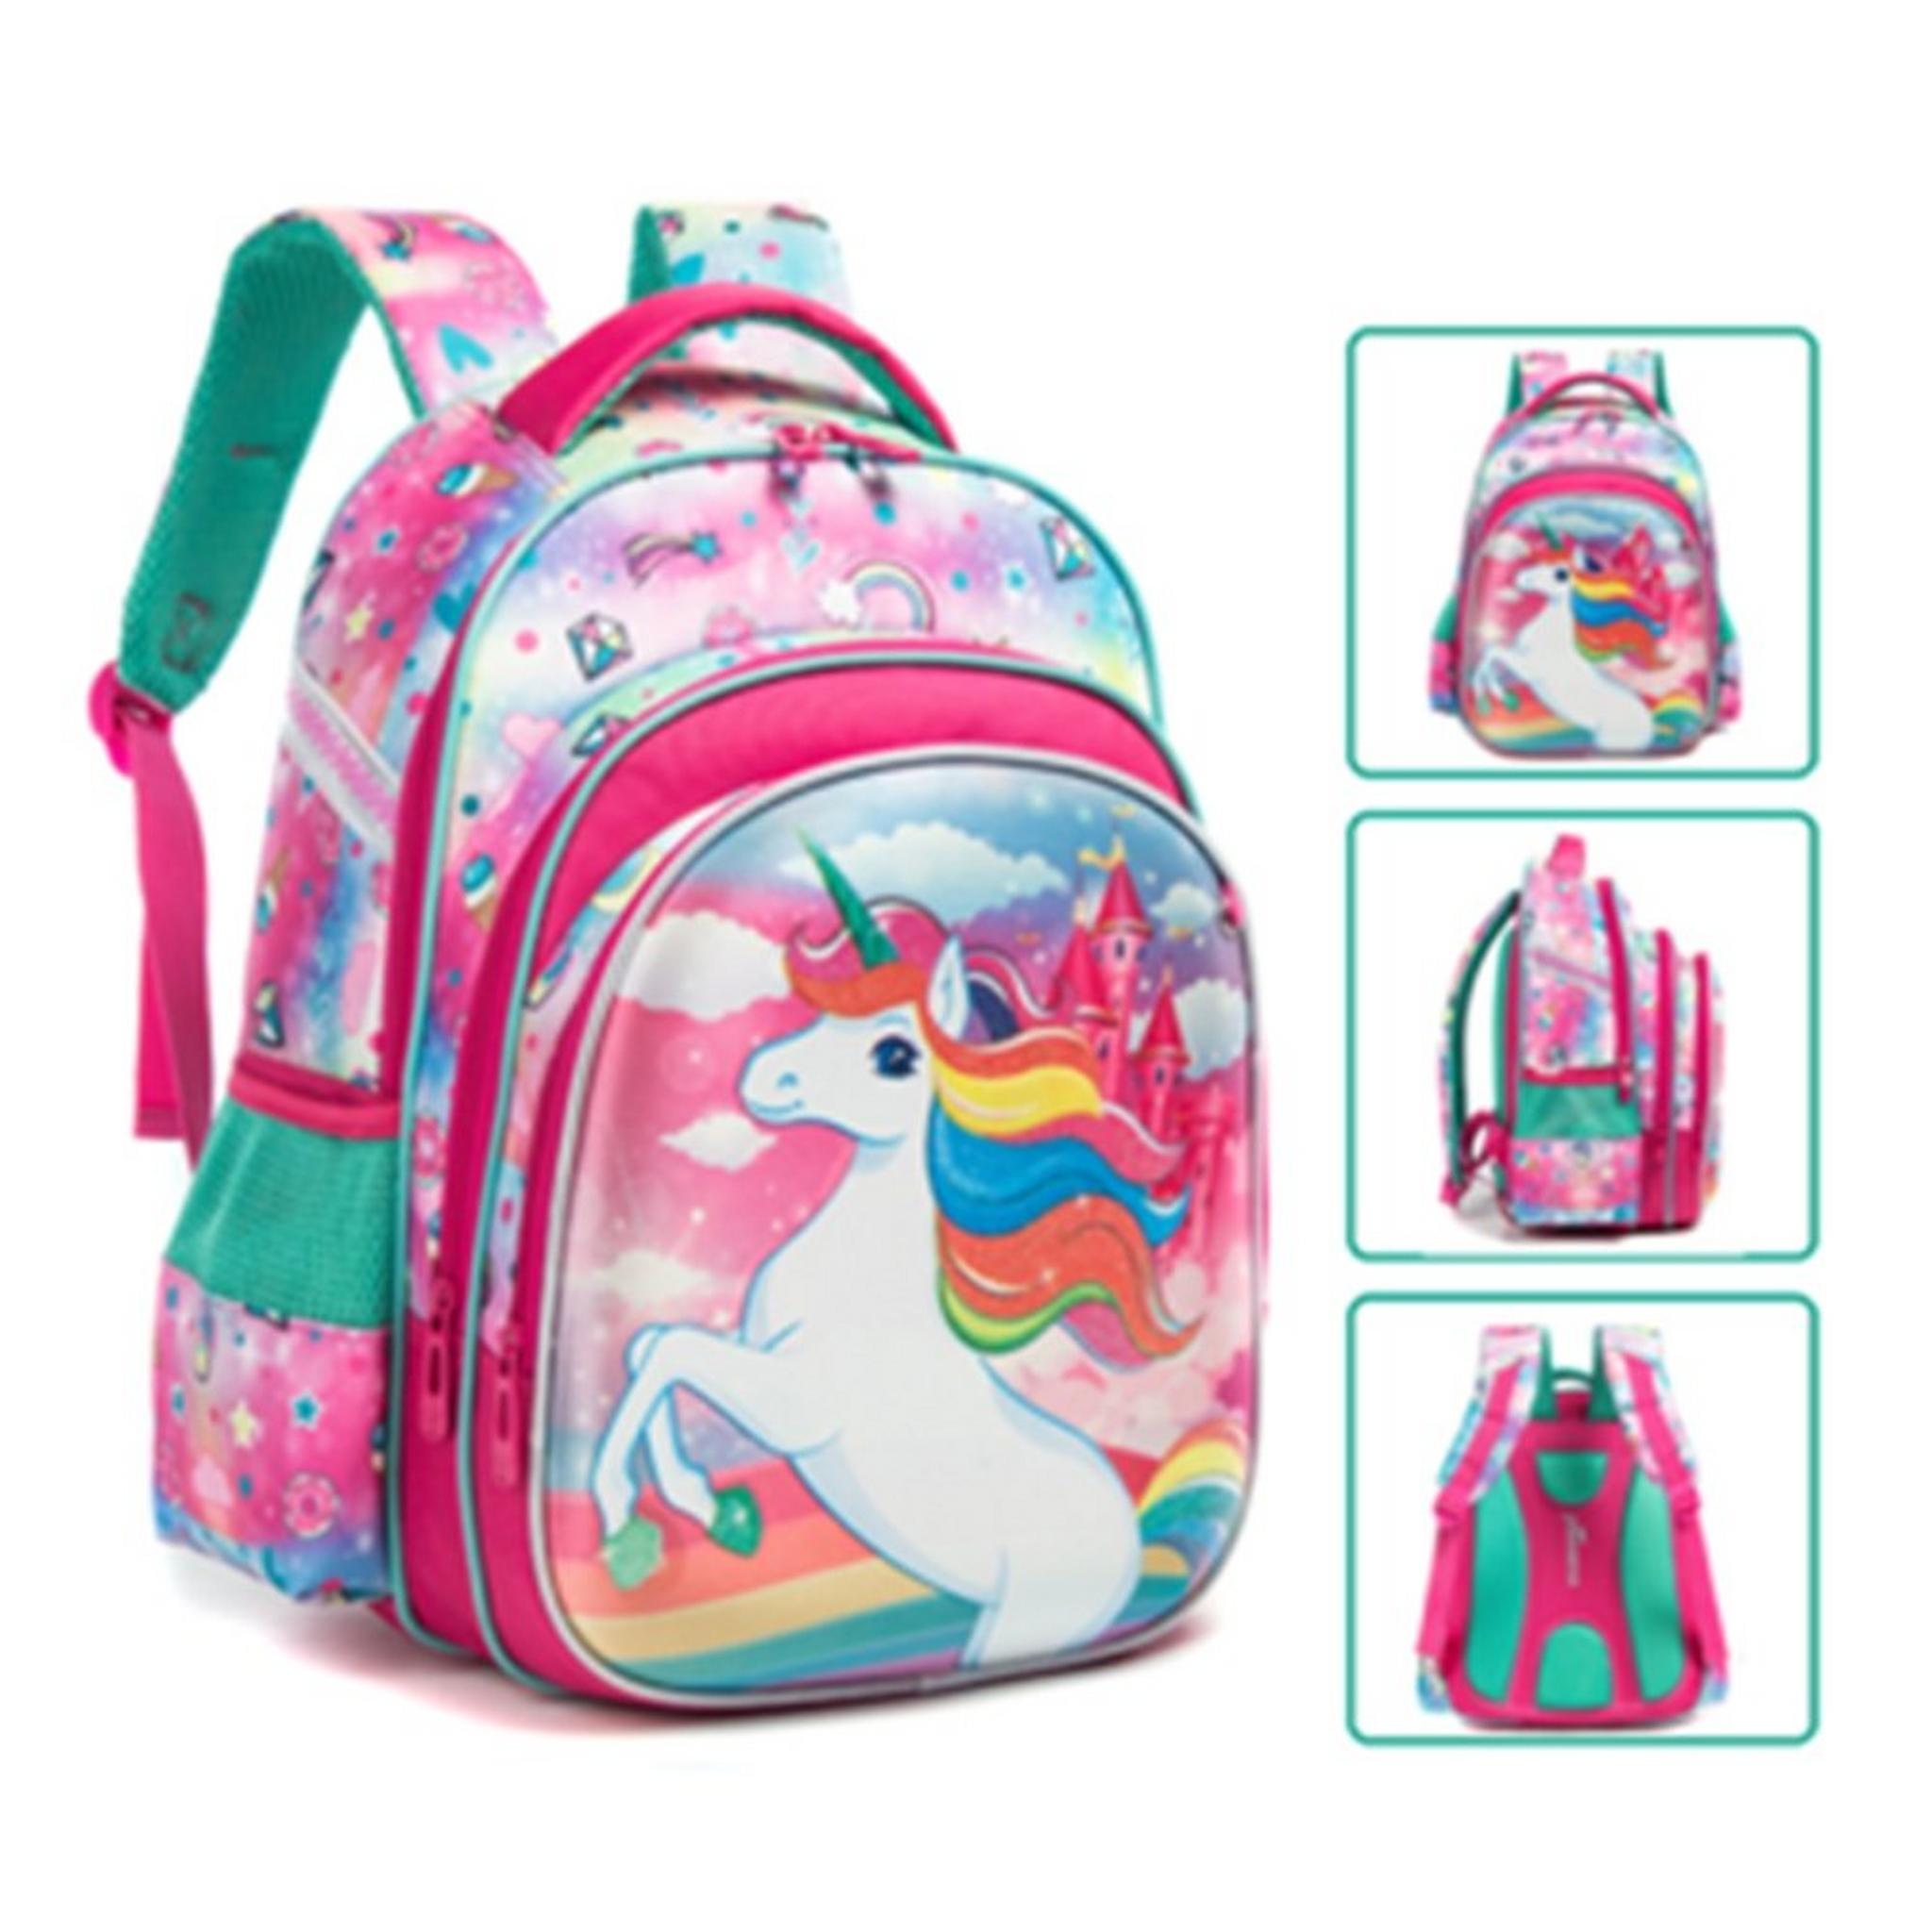 Riwbox Unicorn Backpack - Pink